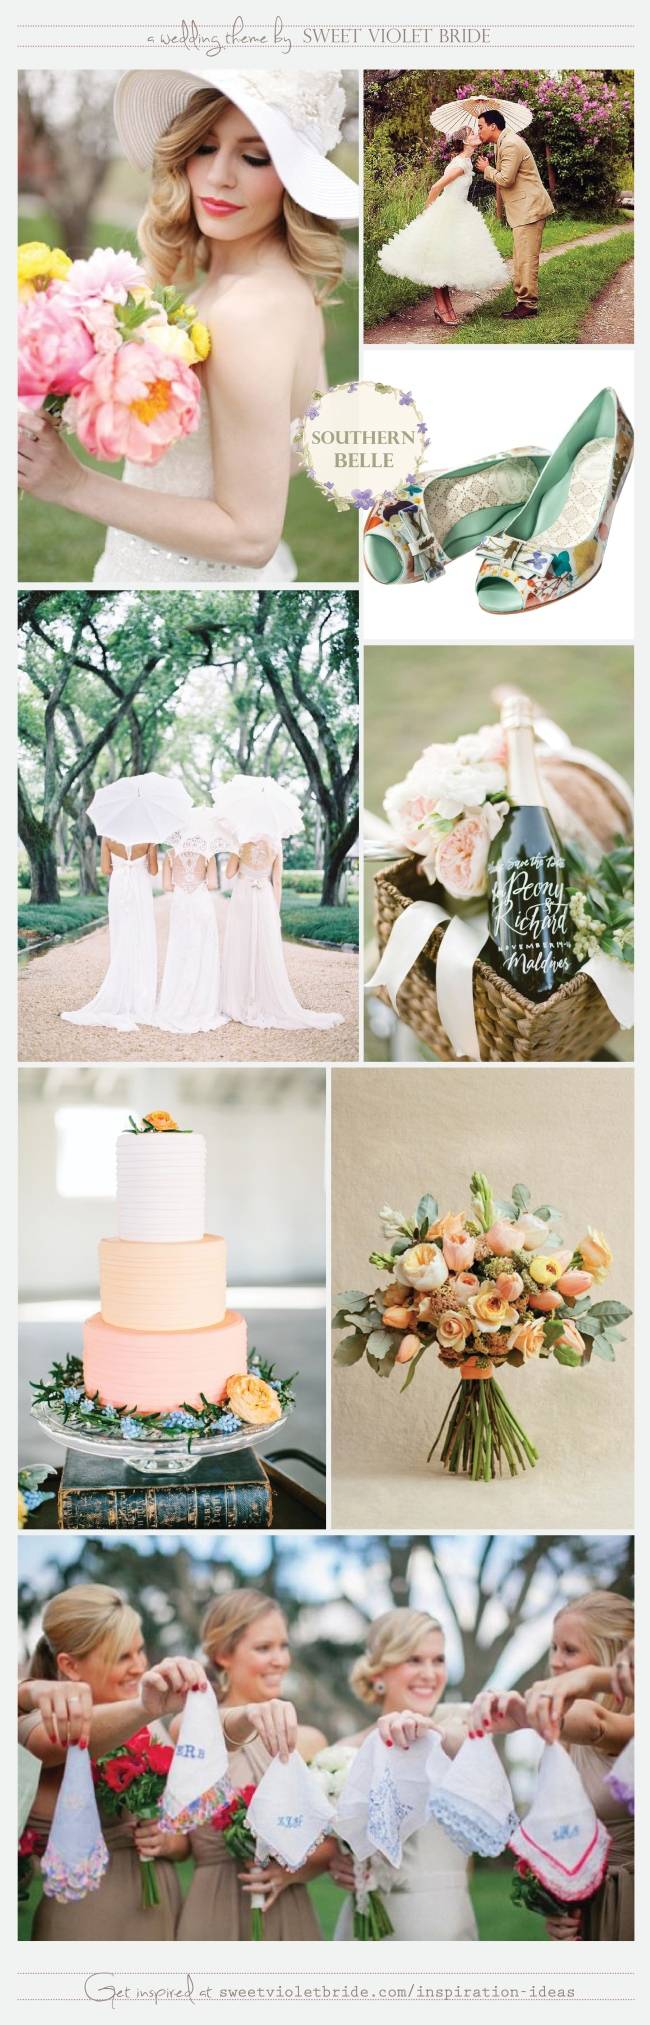 Southern Belle Wedding Inspiration Board by Sweet Violet Bride